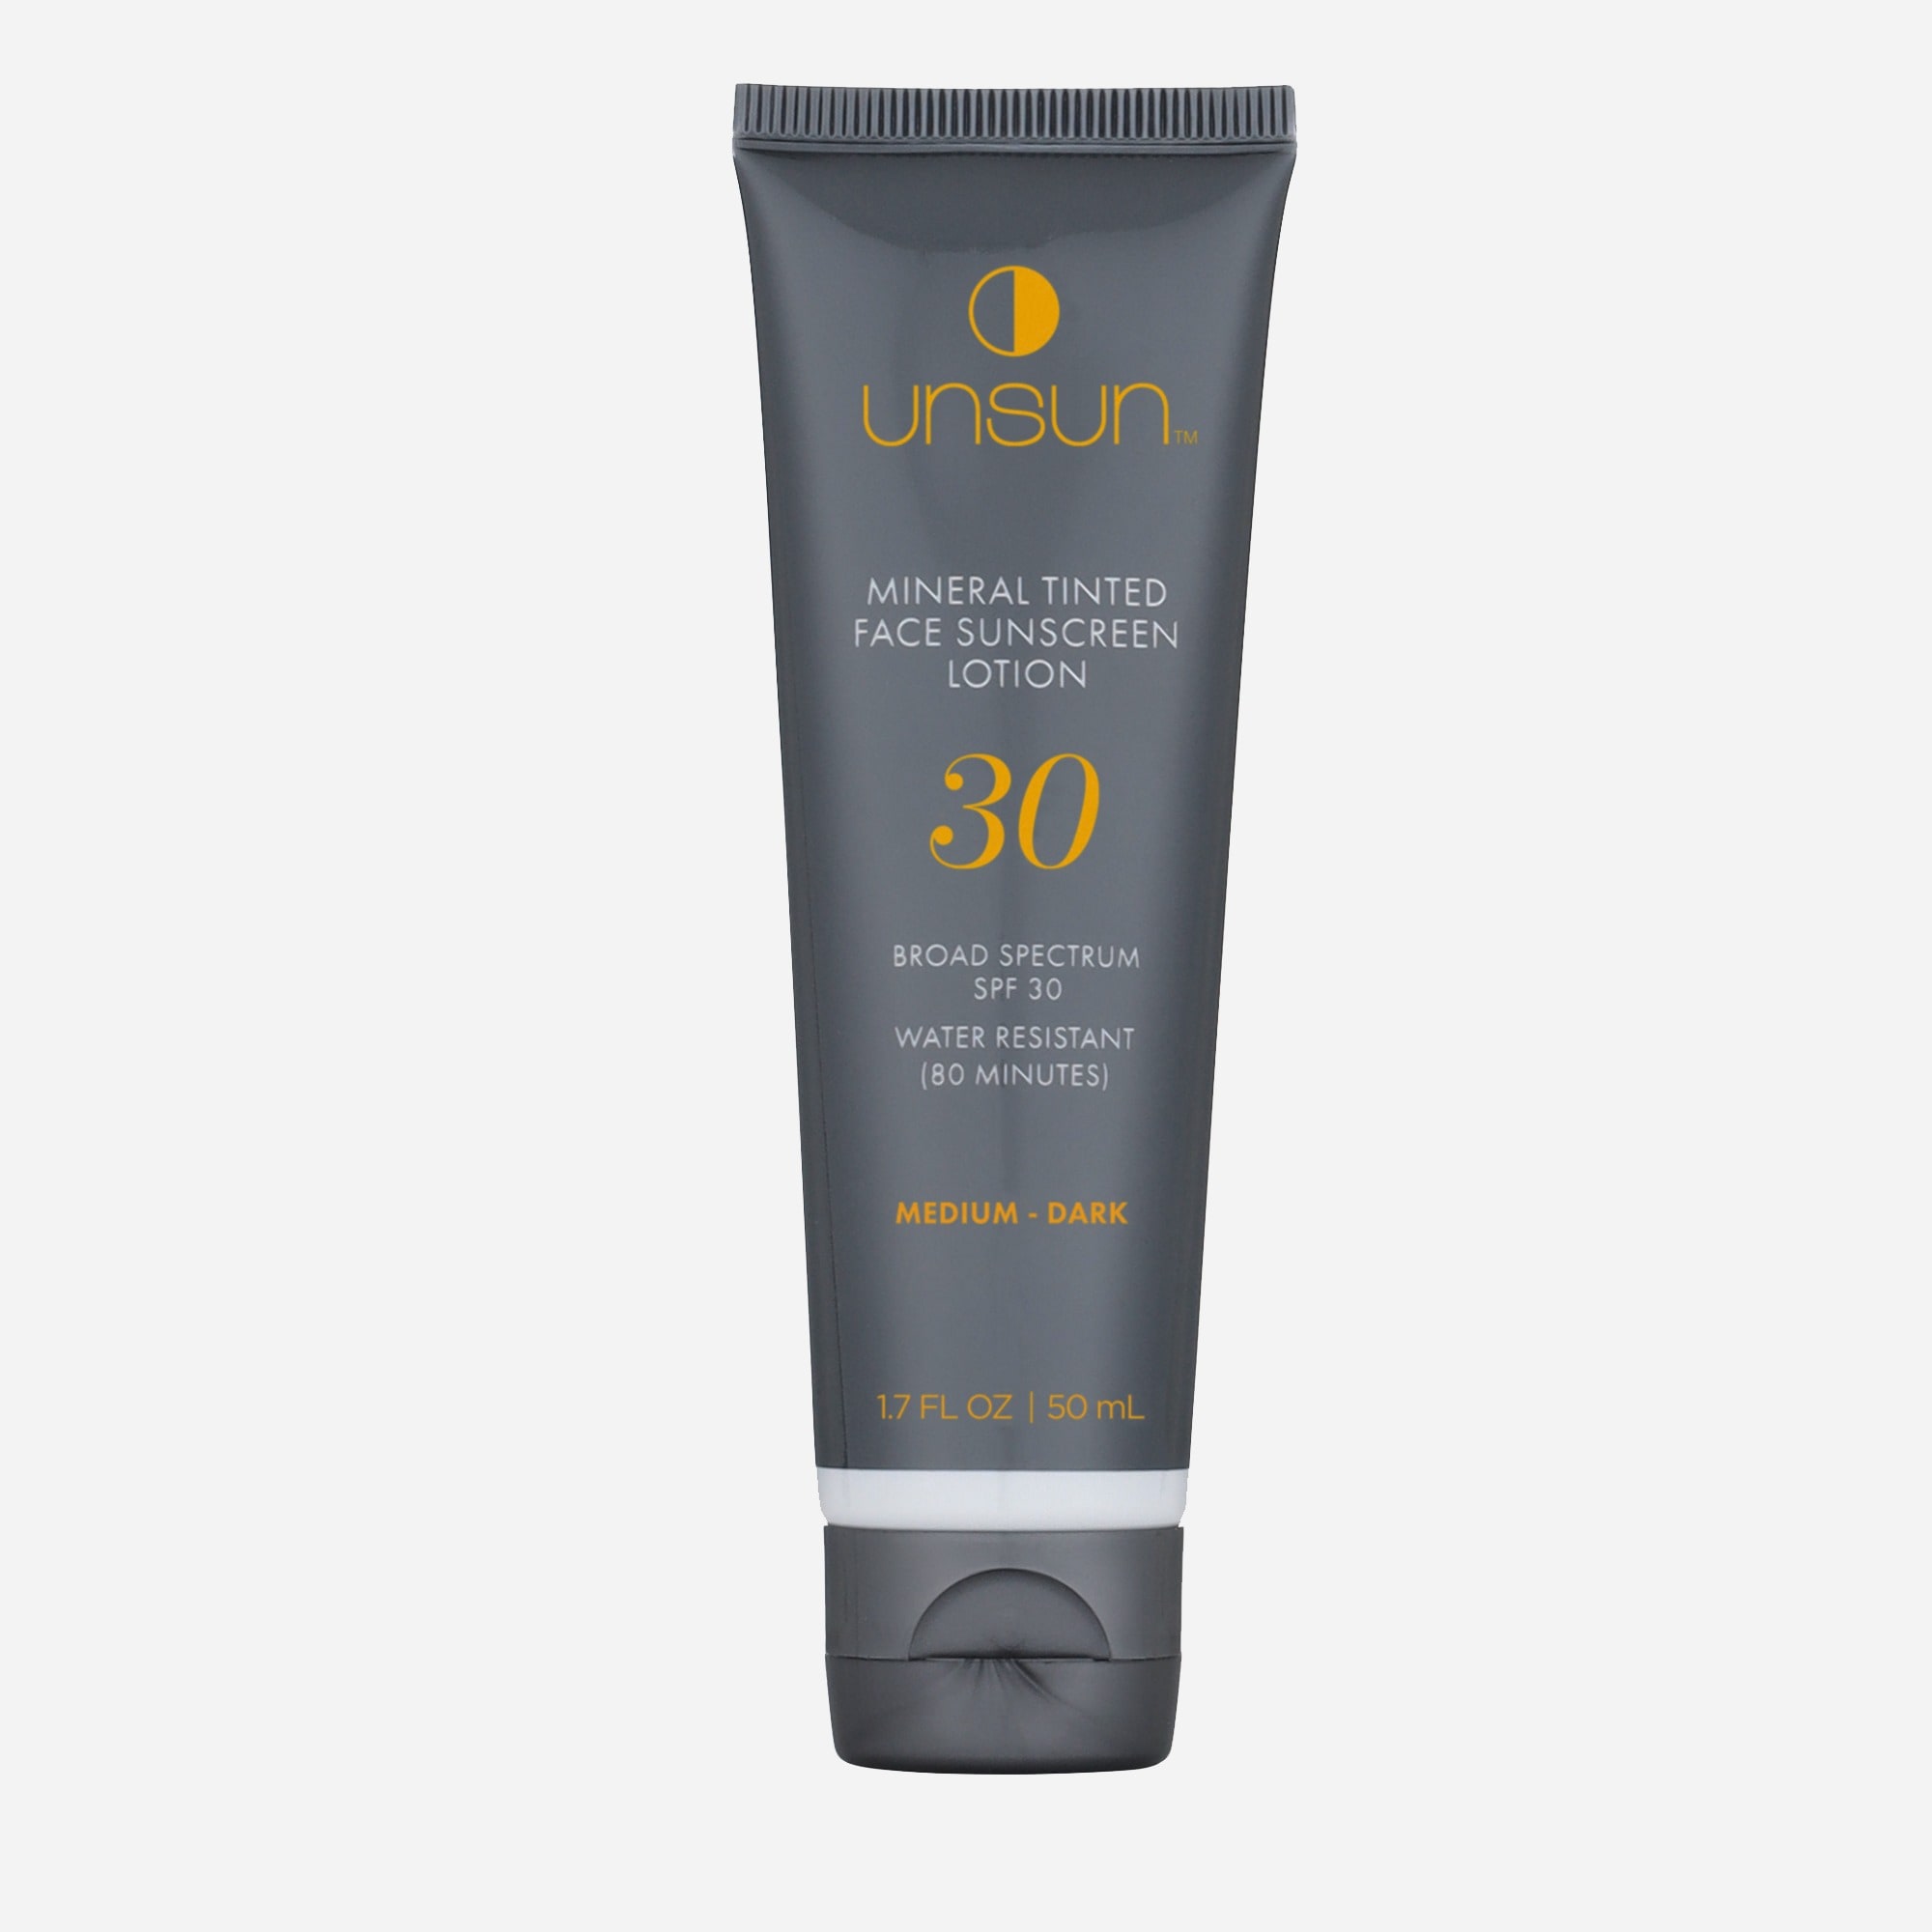 Jcrew Unsun Cosmetics mineral tinted face sunscreen lotion SPF 30 in medium/dark